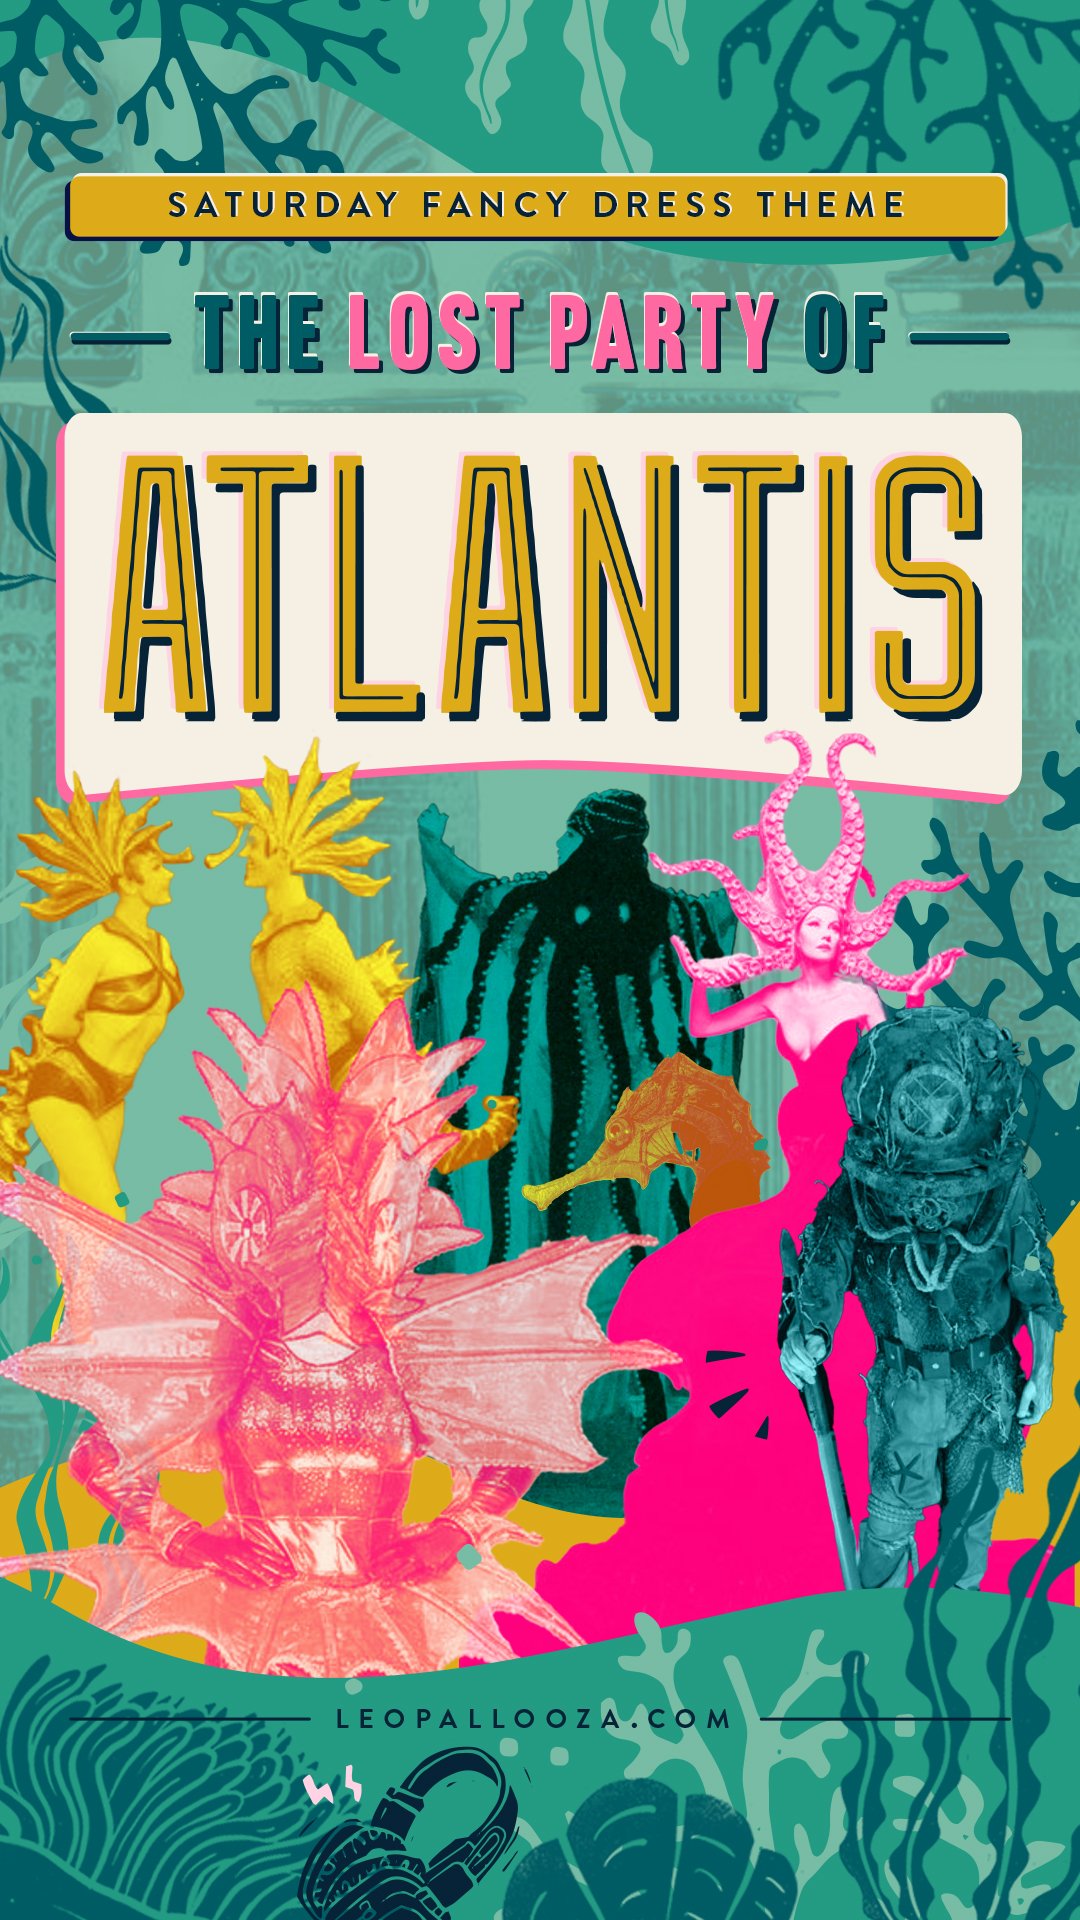 Atlantis | Indoor Venue Decoration - Worlds Of Wonder Decor